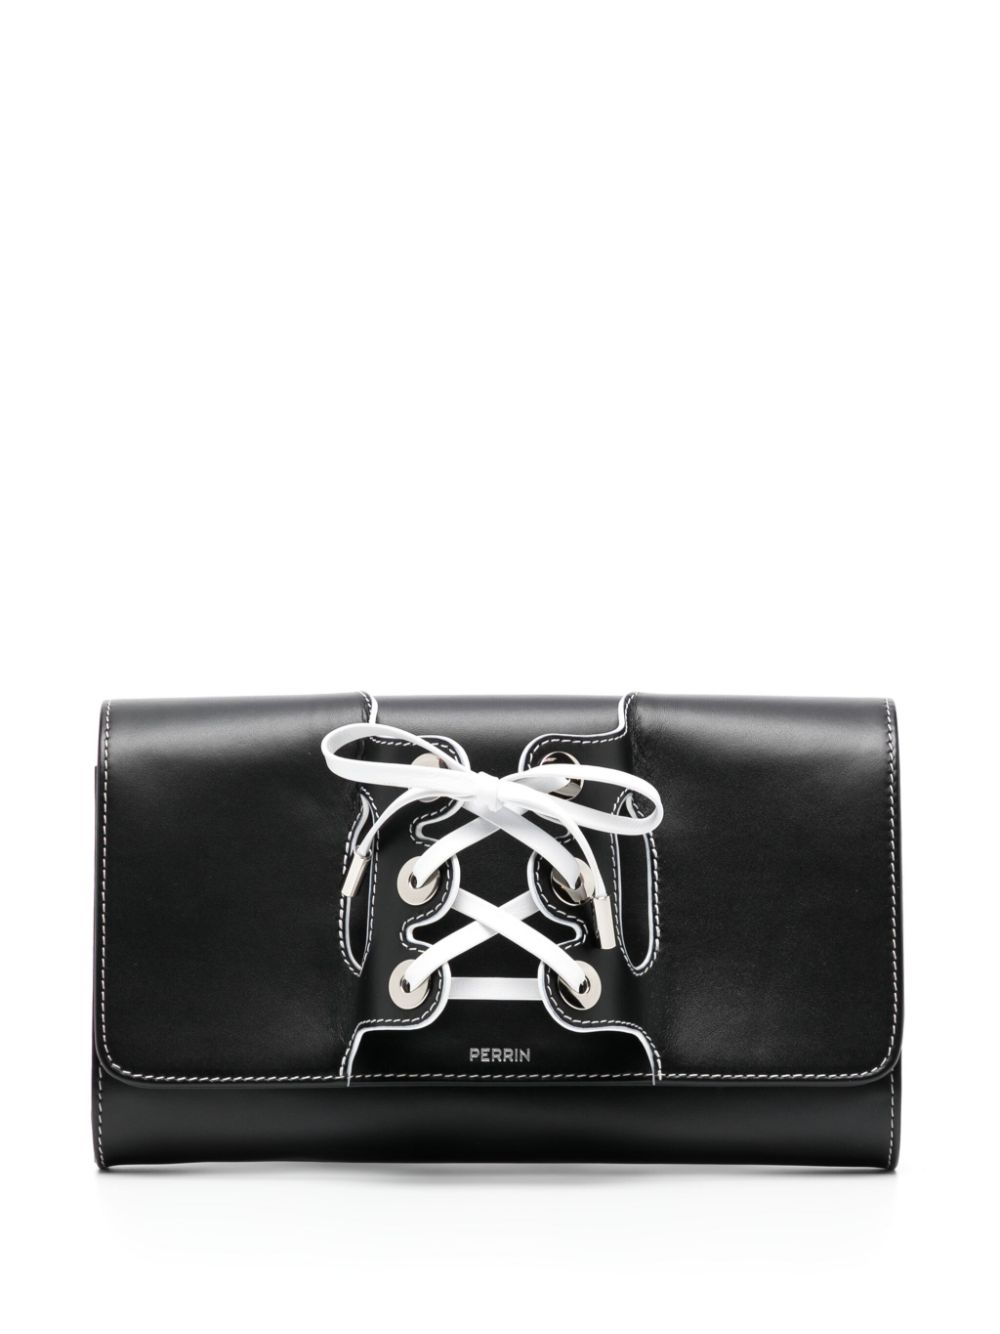 Perrin Paris Lolita leather clutch bag - Black von Perrin Paris